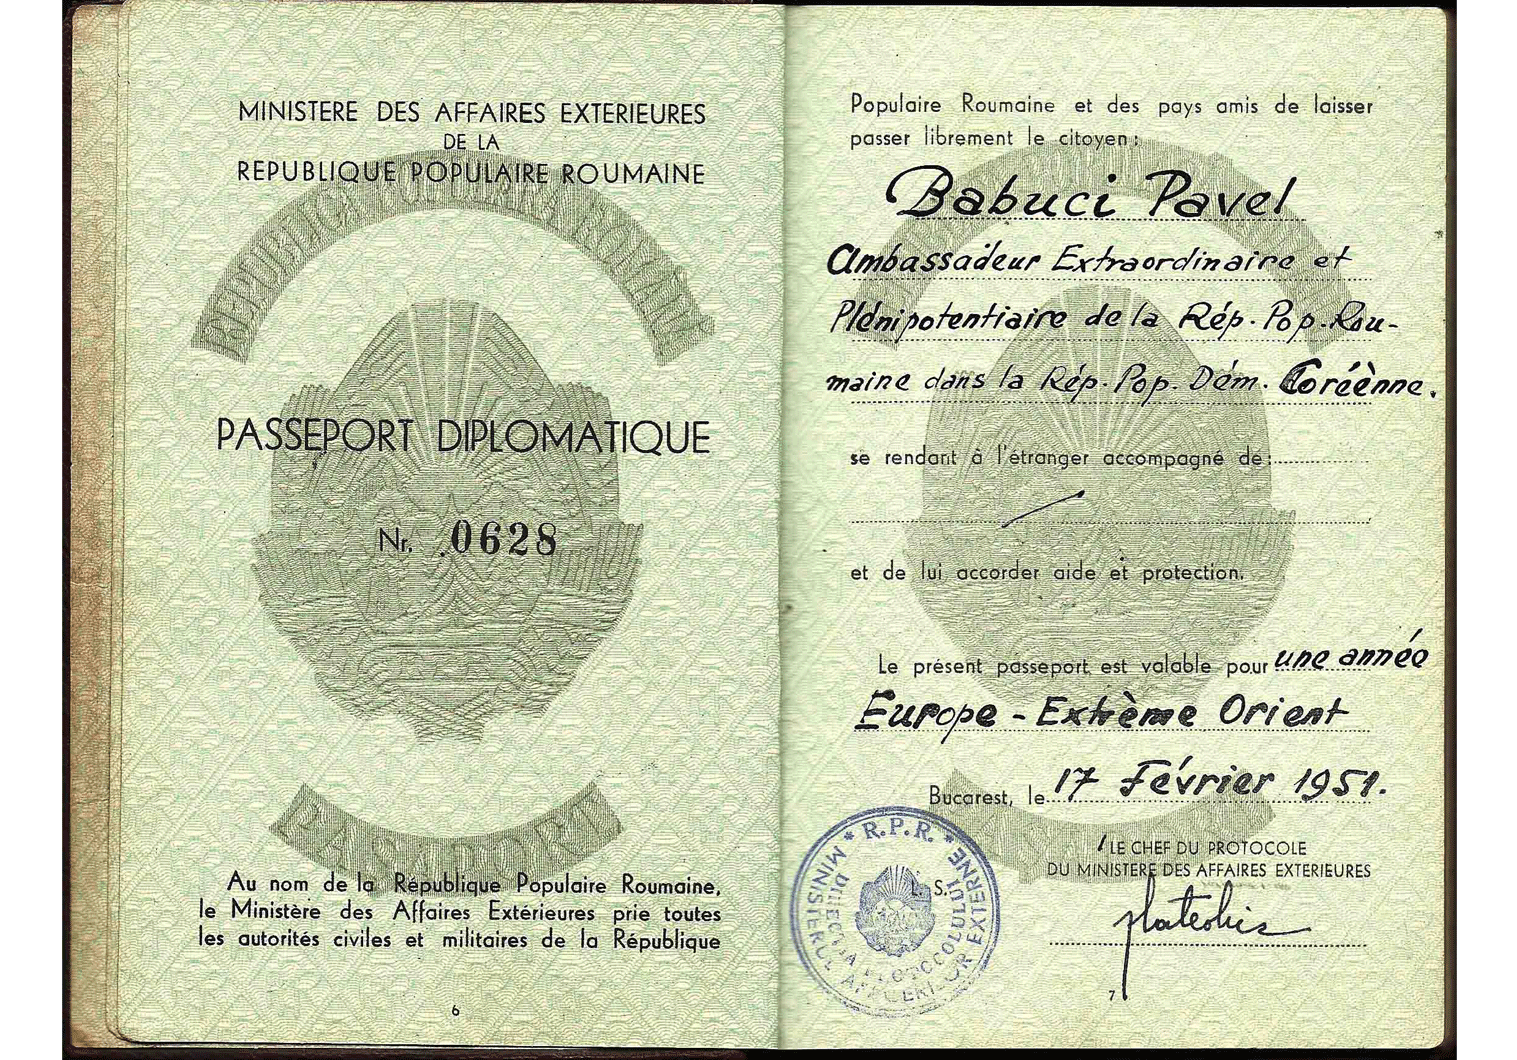 Rarest of visas - North Korean Diplomatic visa inside a 1951 passport